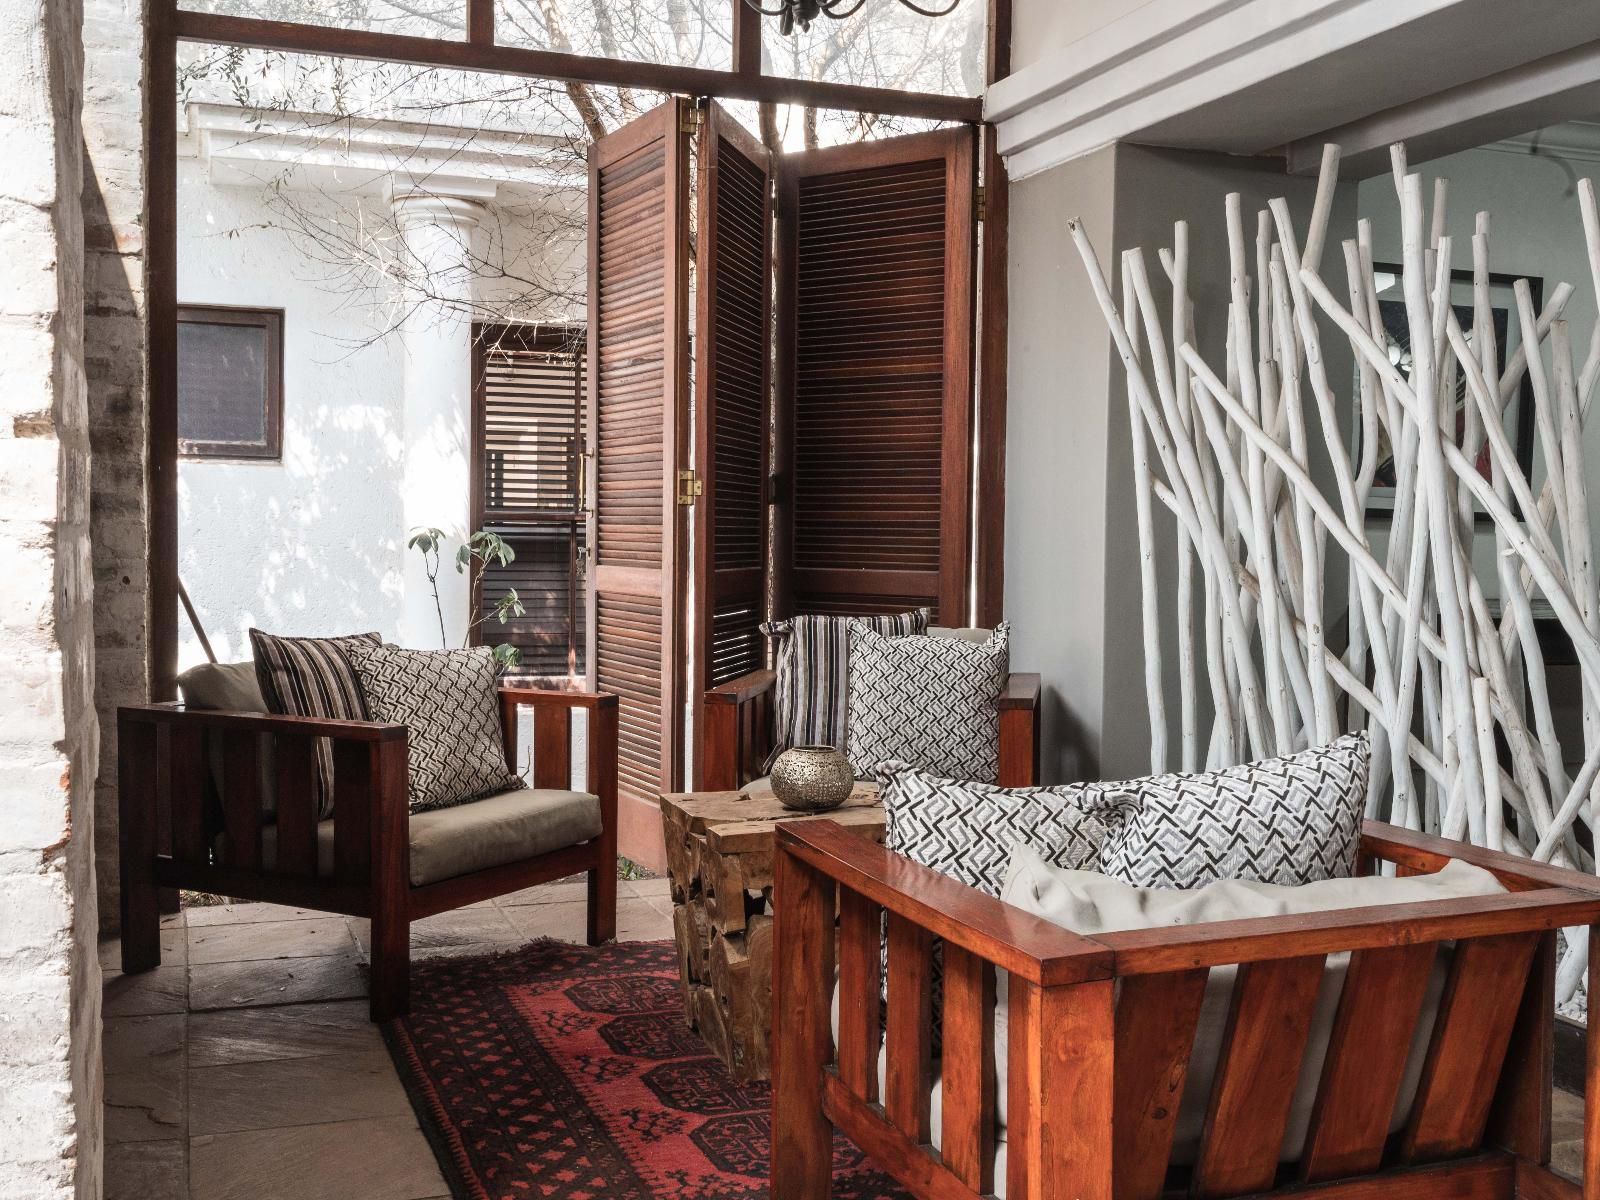 Royal Albert Suites Waterkloof Pretoria Tshwane Gauteng South Africa House, Building, Architecture, Living Room